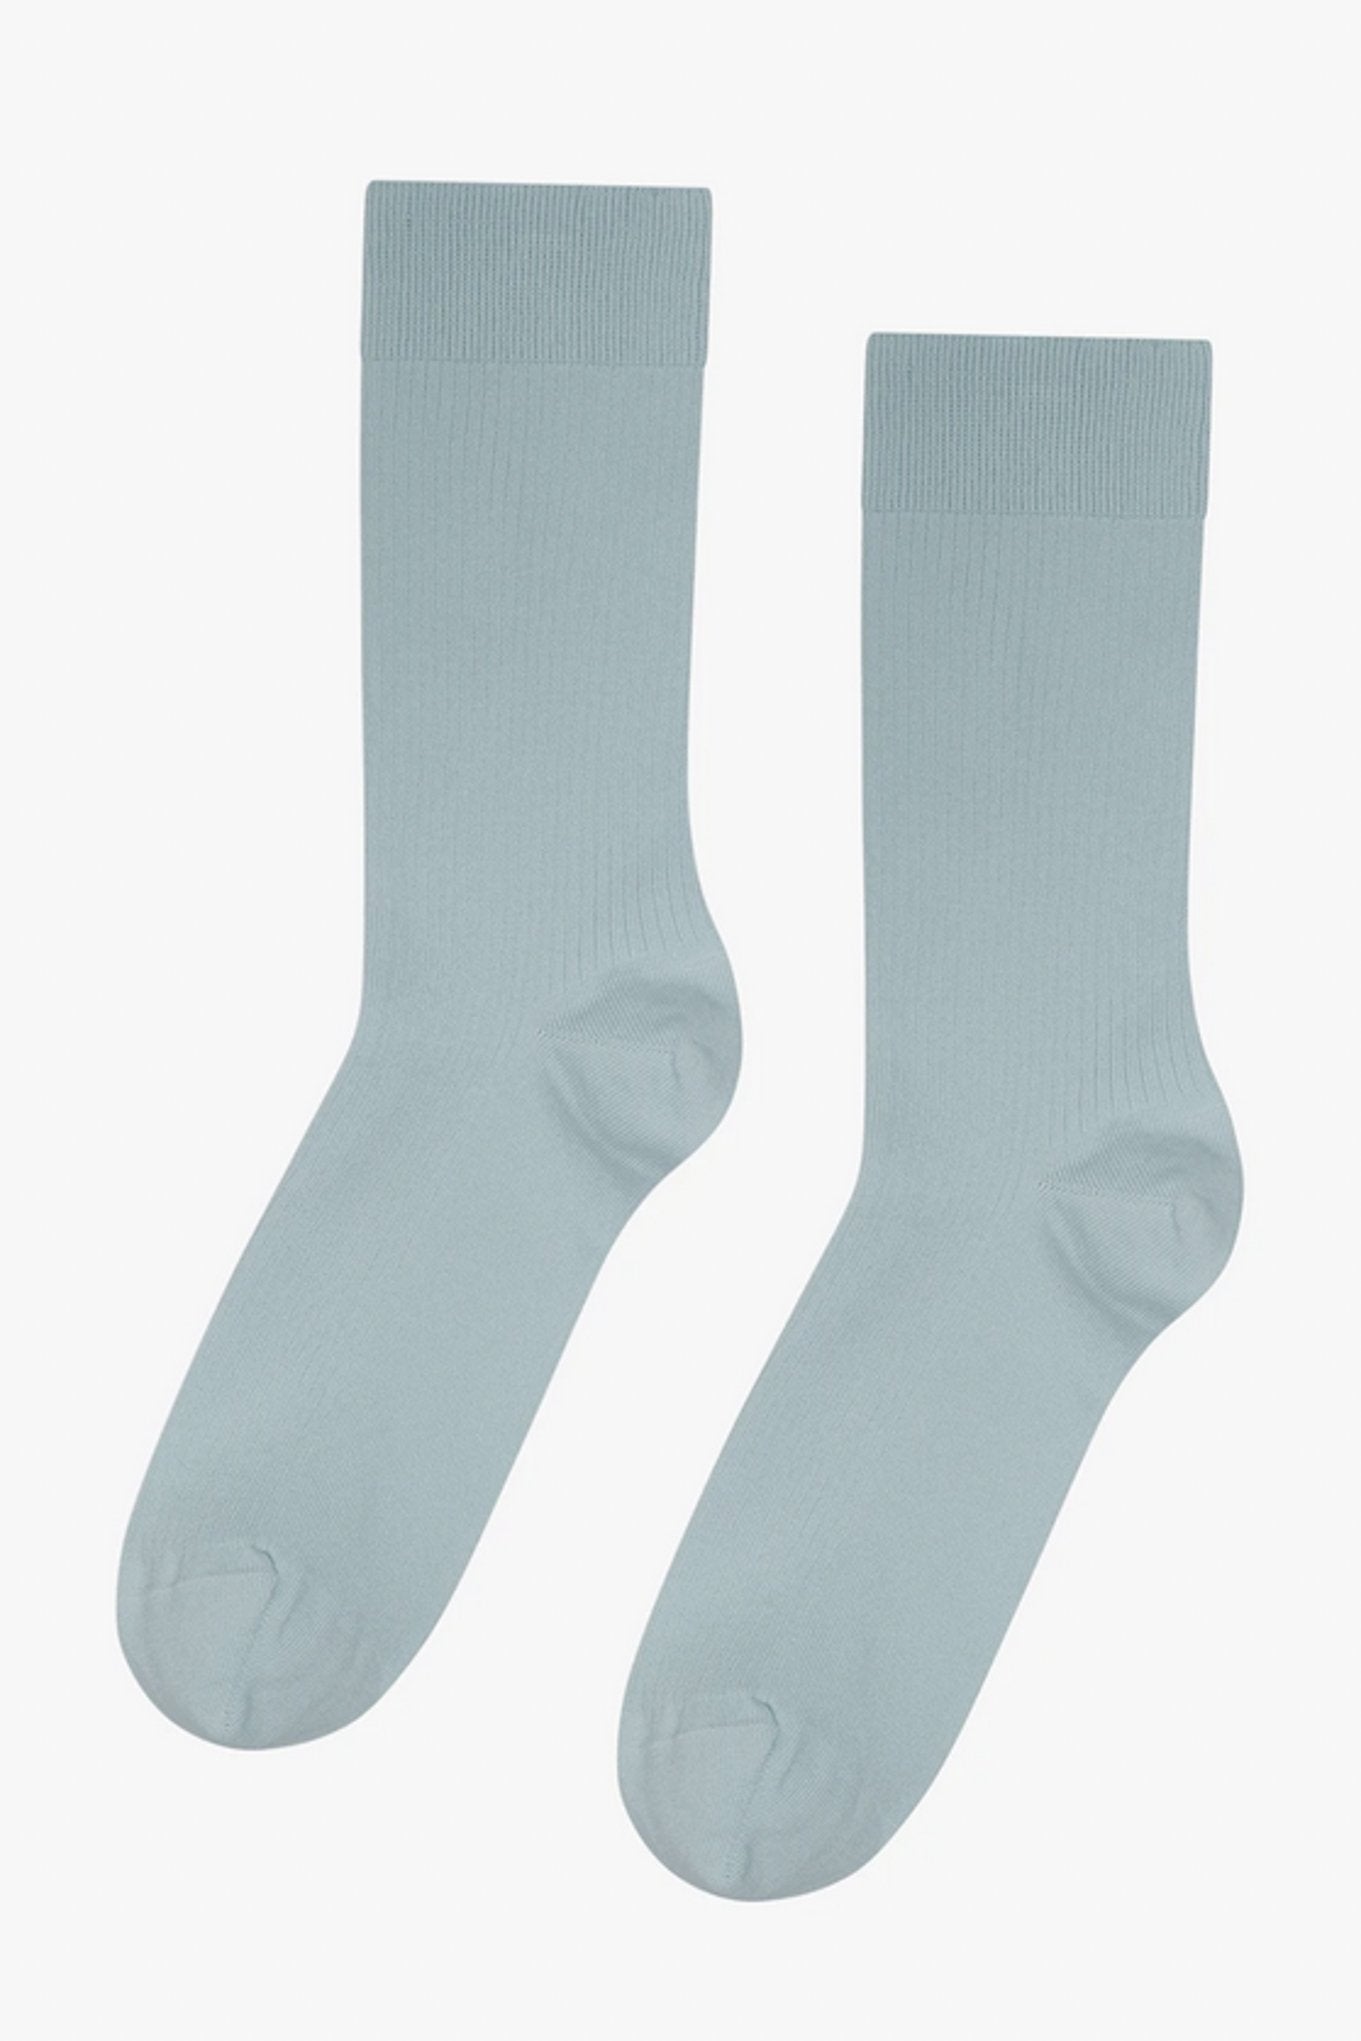 CLASSIC ORGANIC Socks